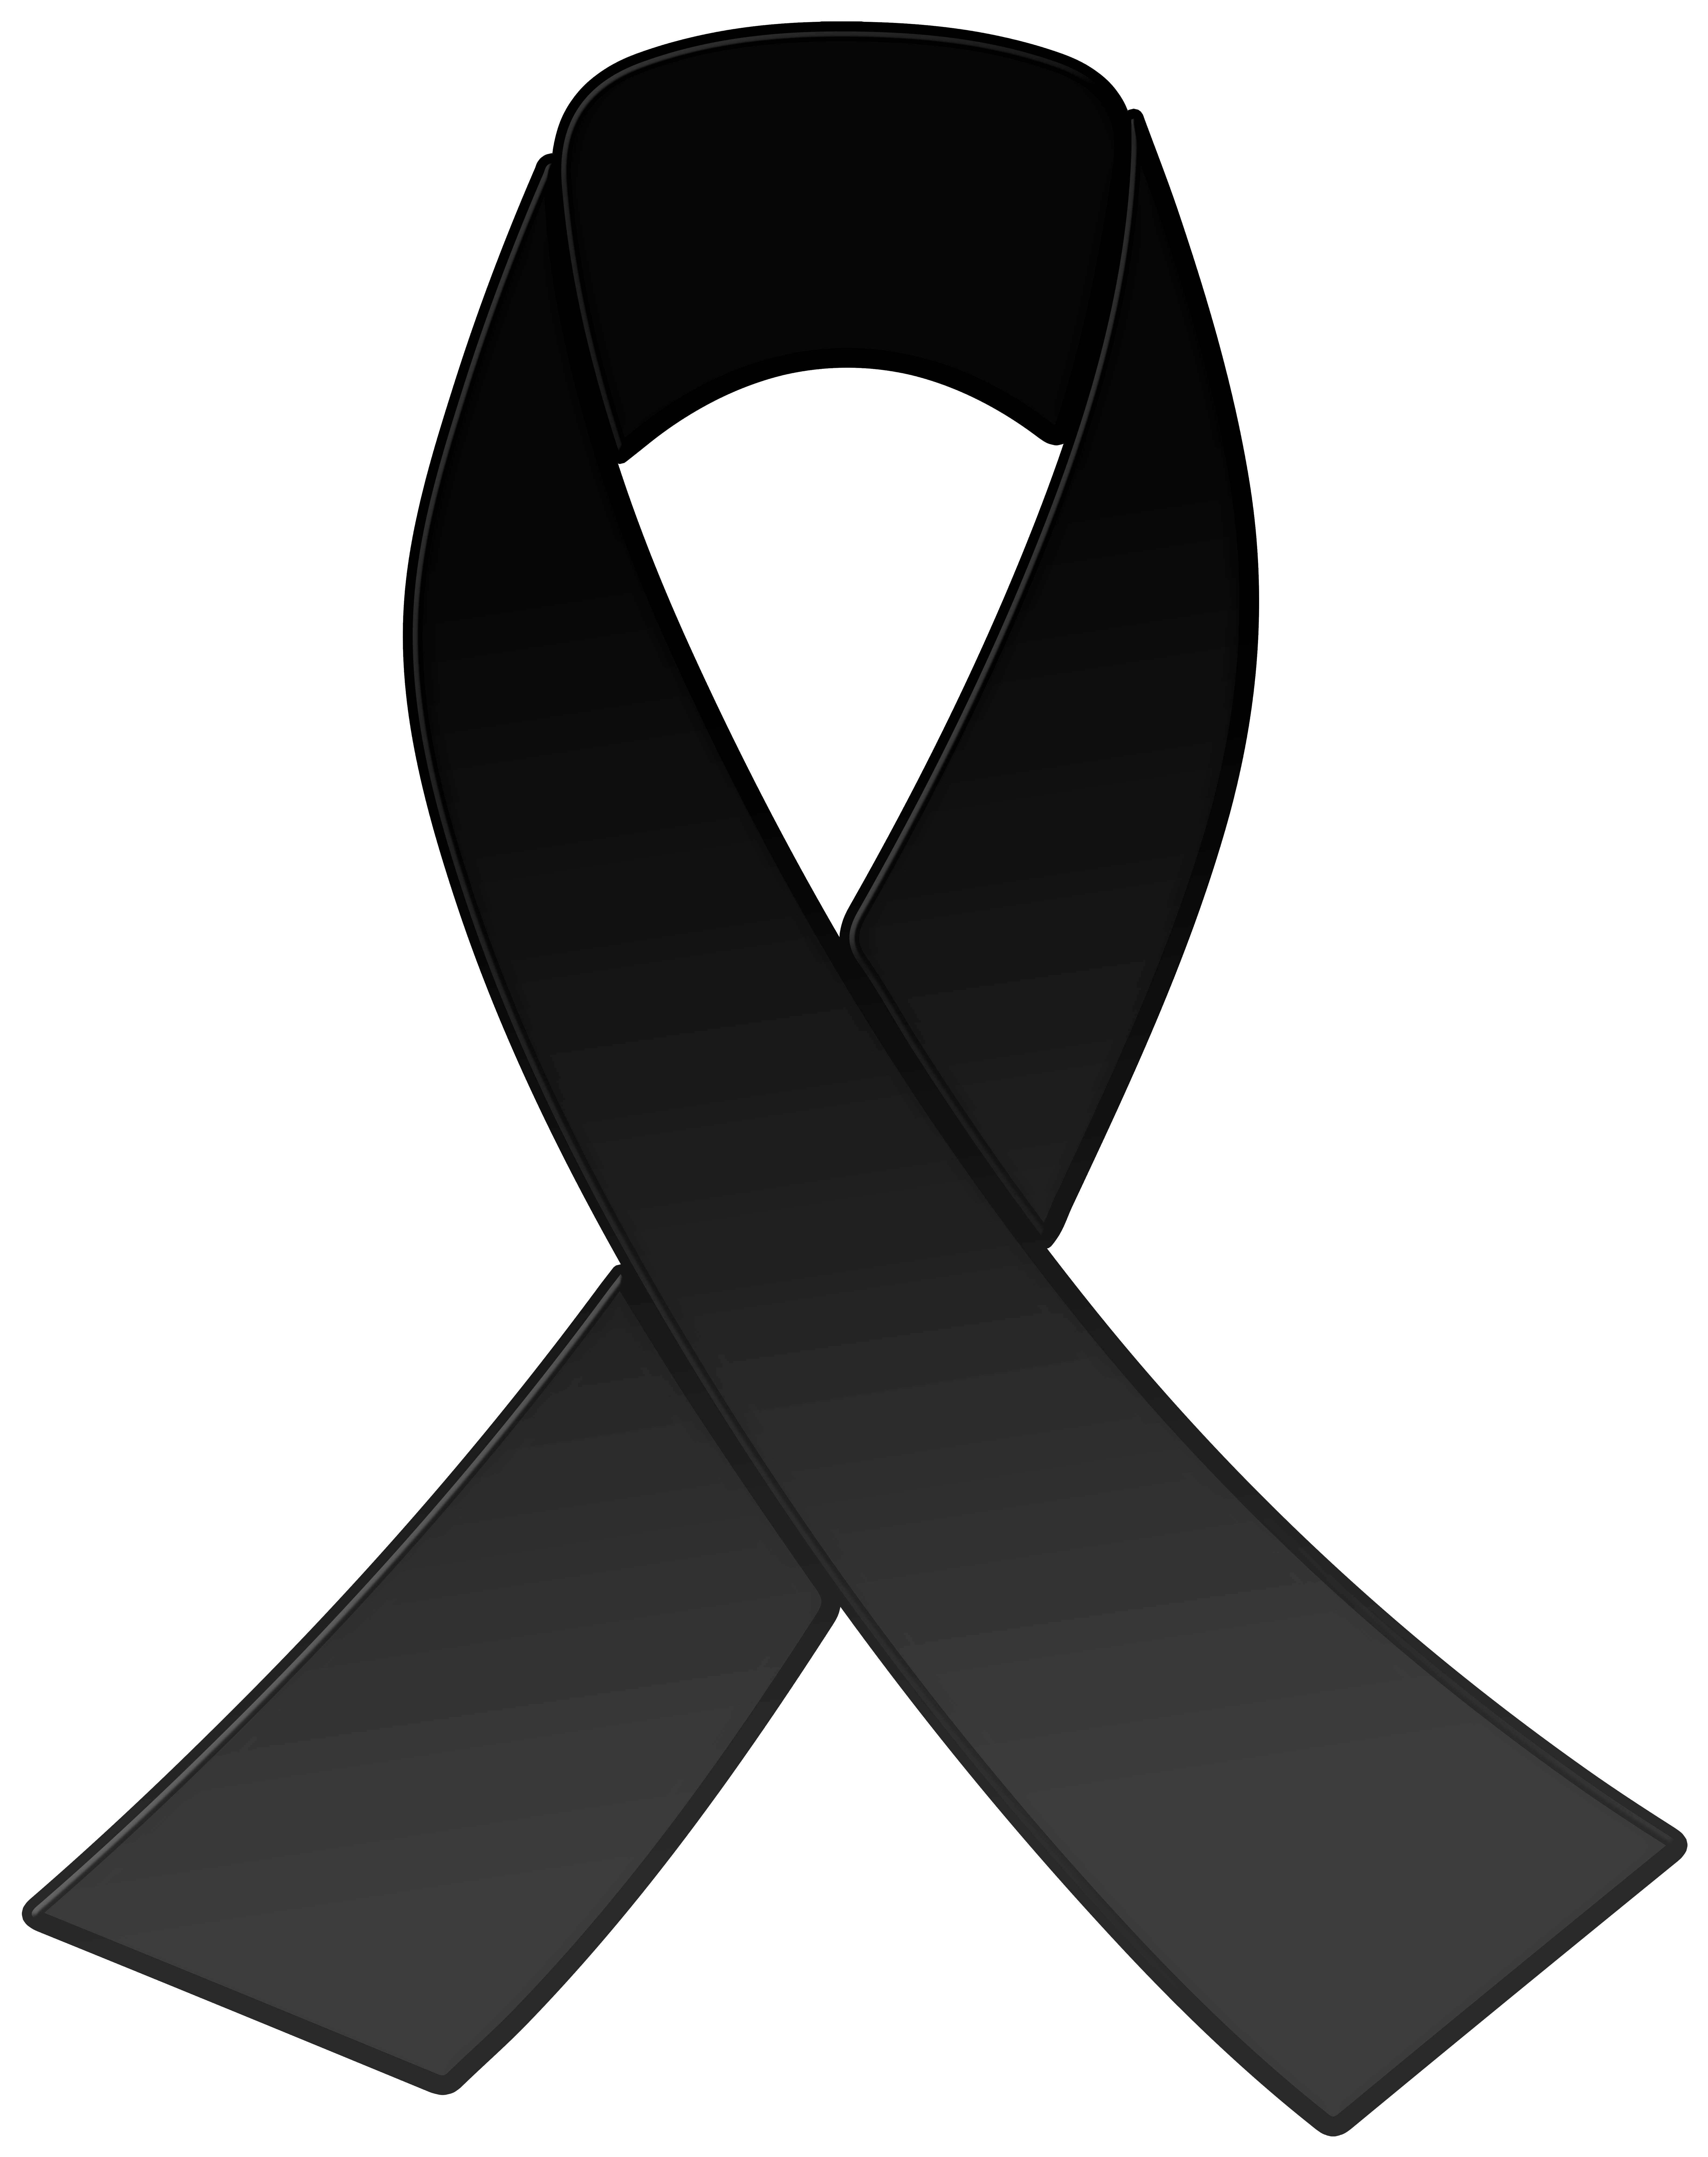 Black Awareness Ribbon PNG Clipart.